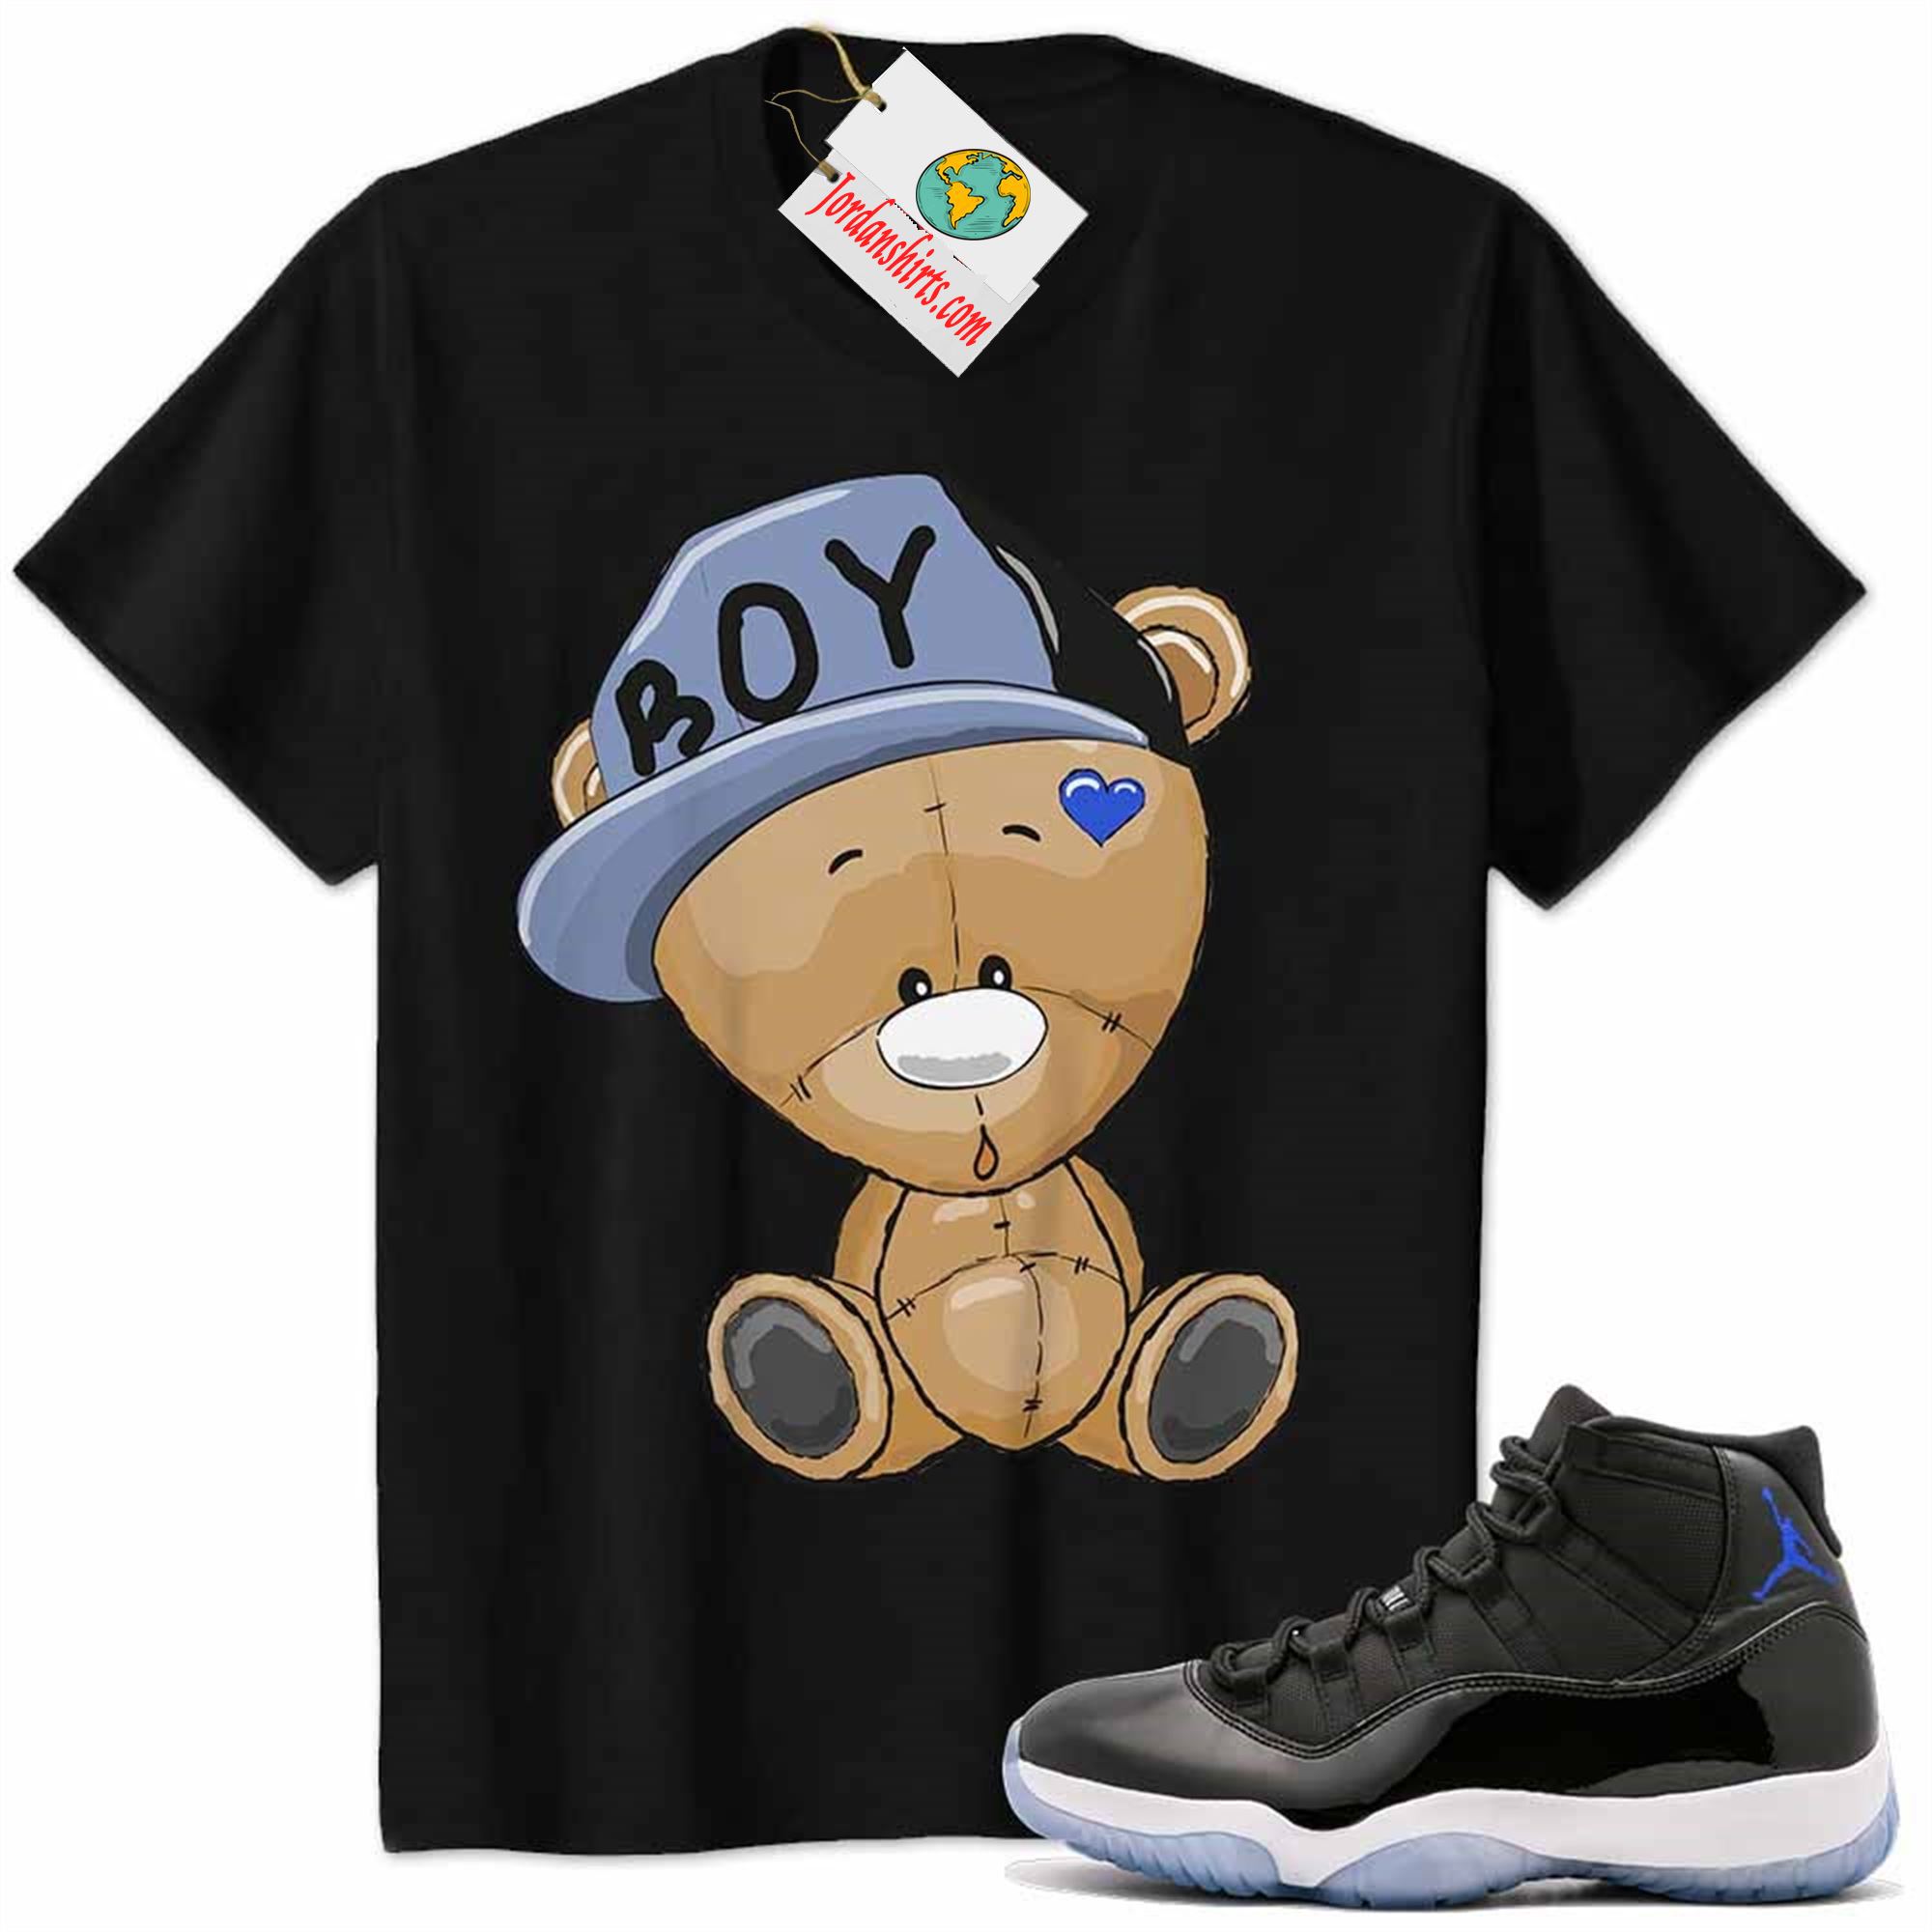 Jordan 11 Shirt, Jordan 11 Space Jam Shirt Cute Baby Teddy Bear Black Size Up To 5xl